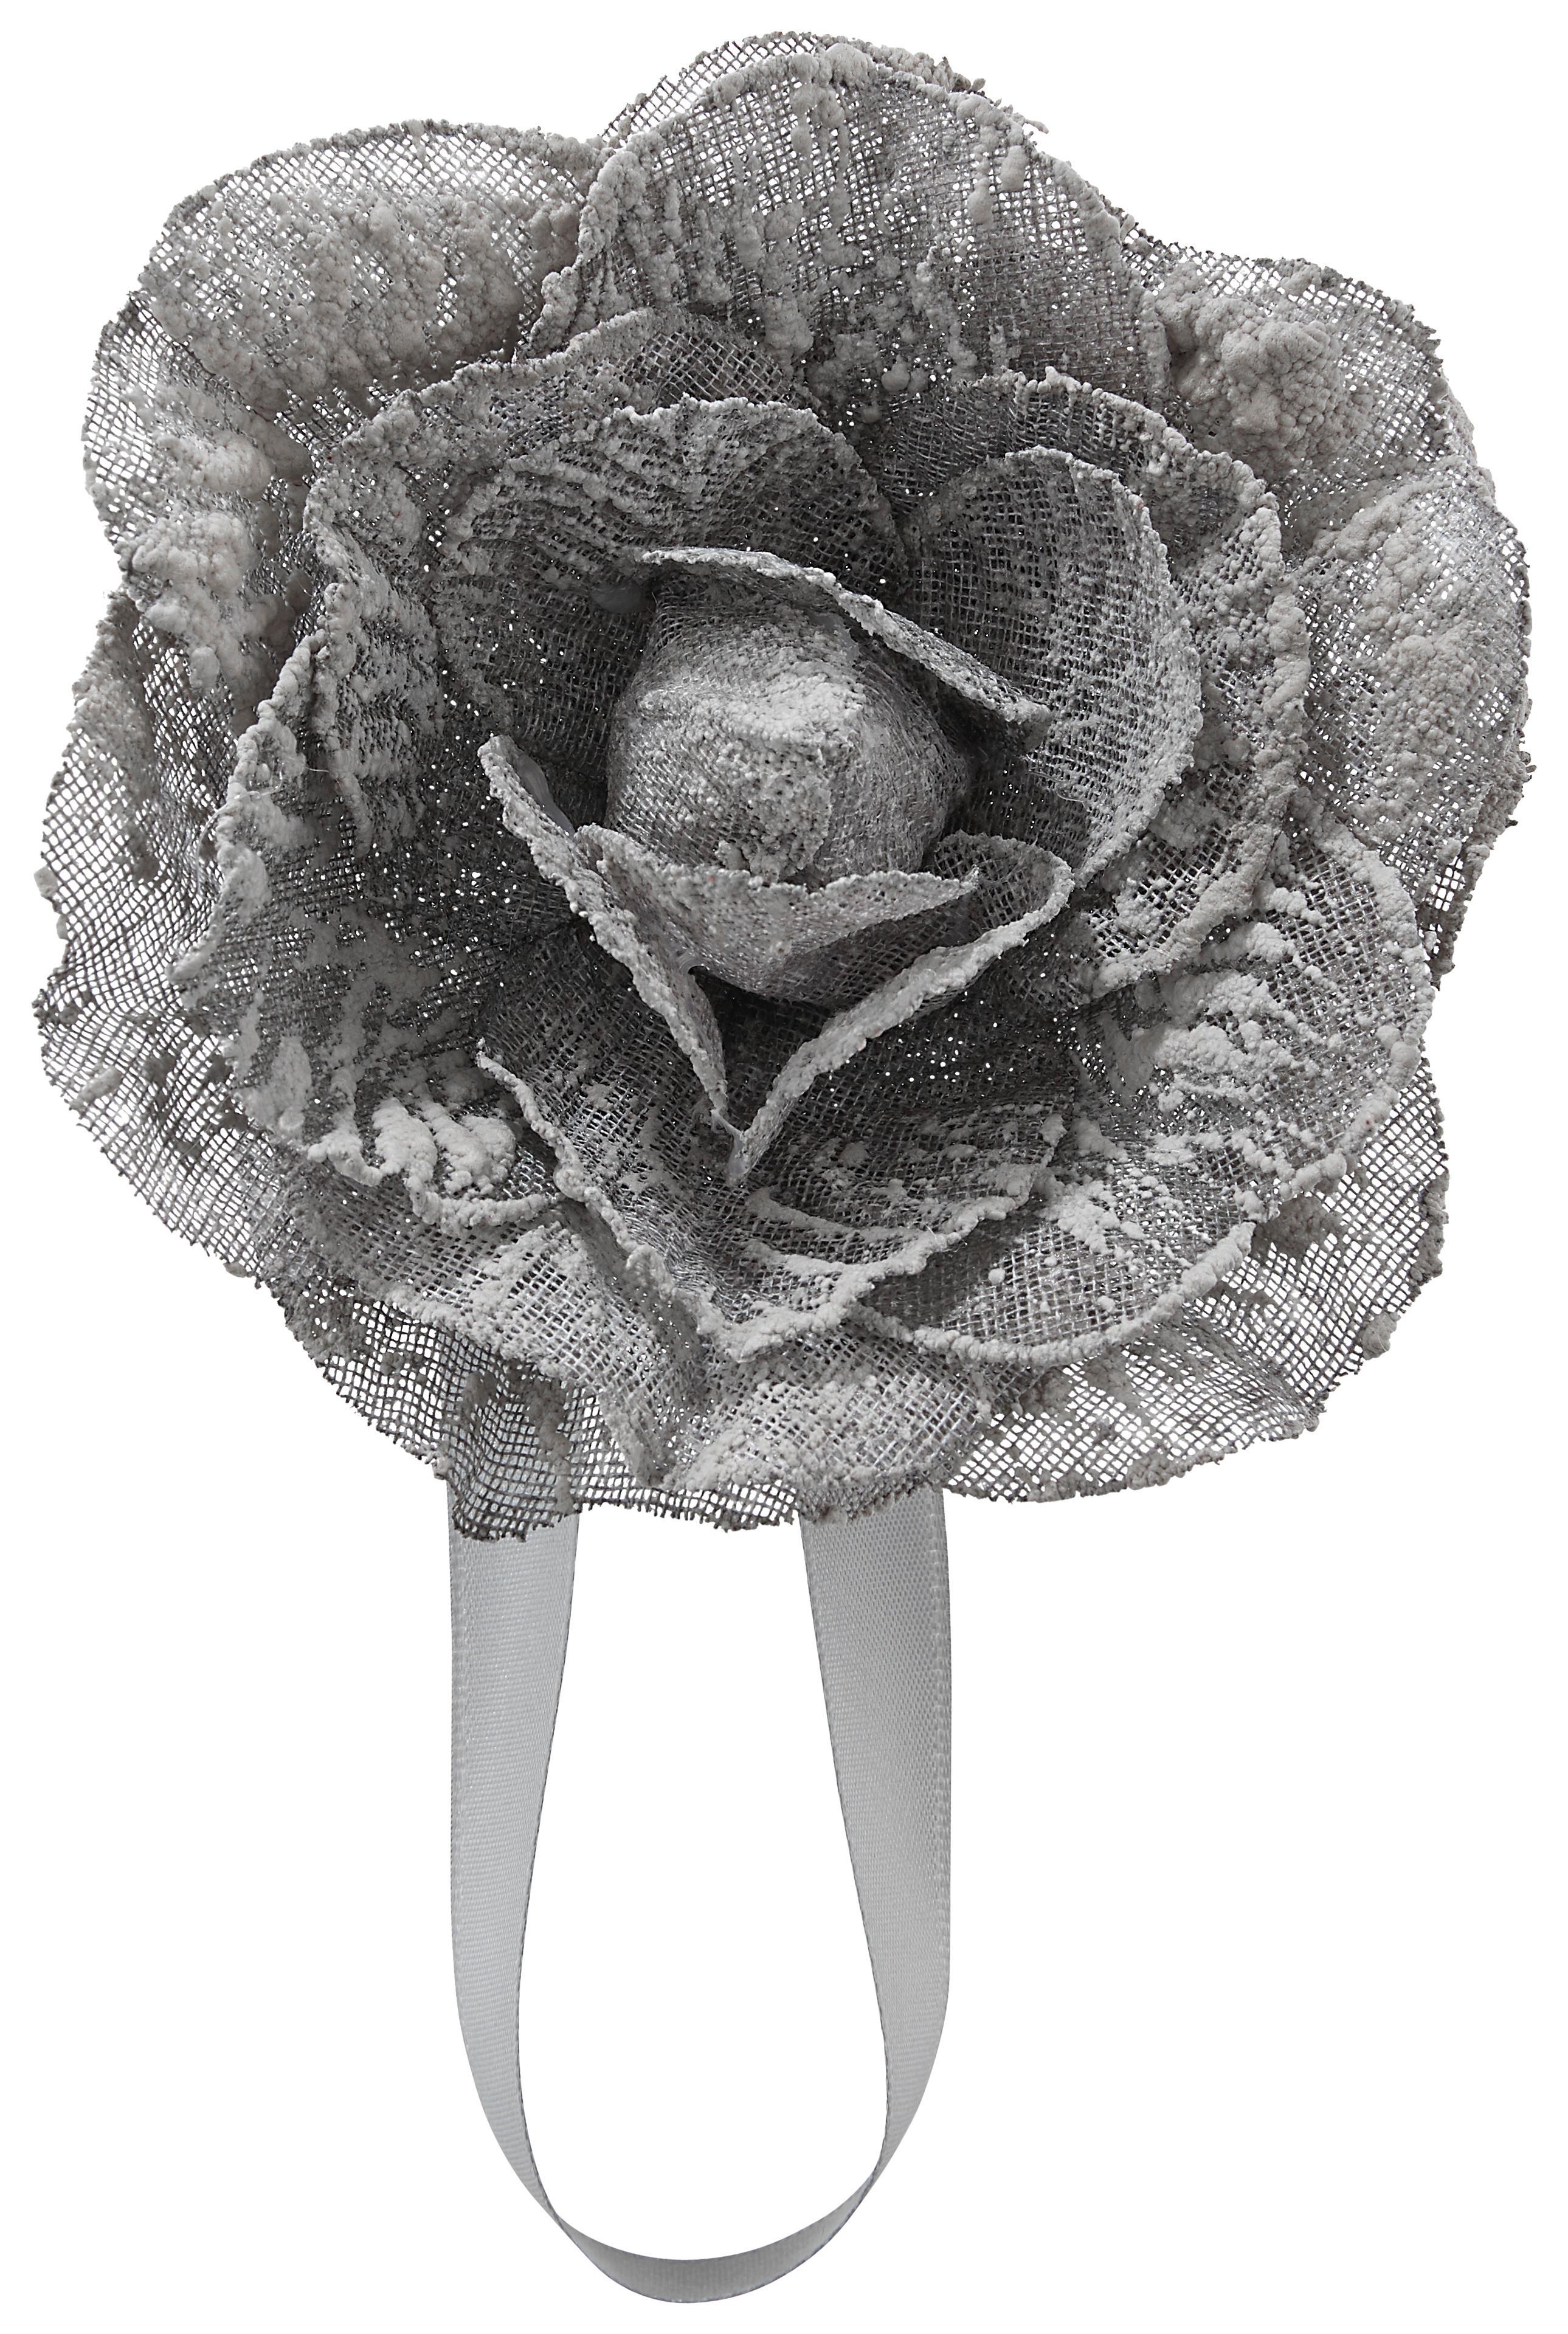 Kopča Za Zavjese Rose - antracit, Romantik / Landhaus, tekstil (11cm) - Modern Living